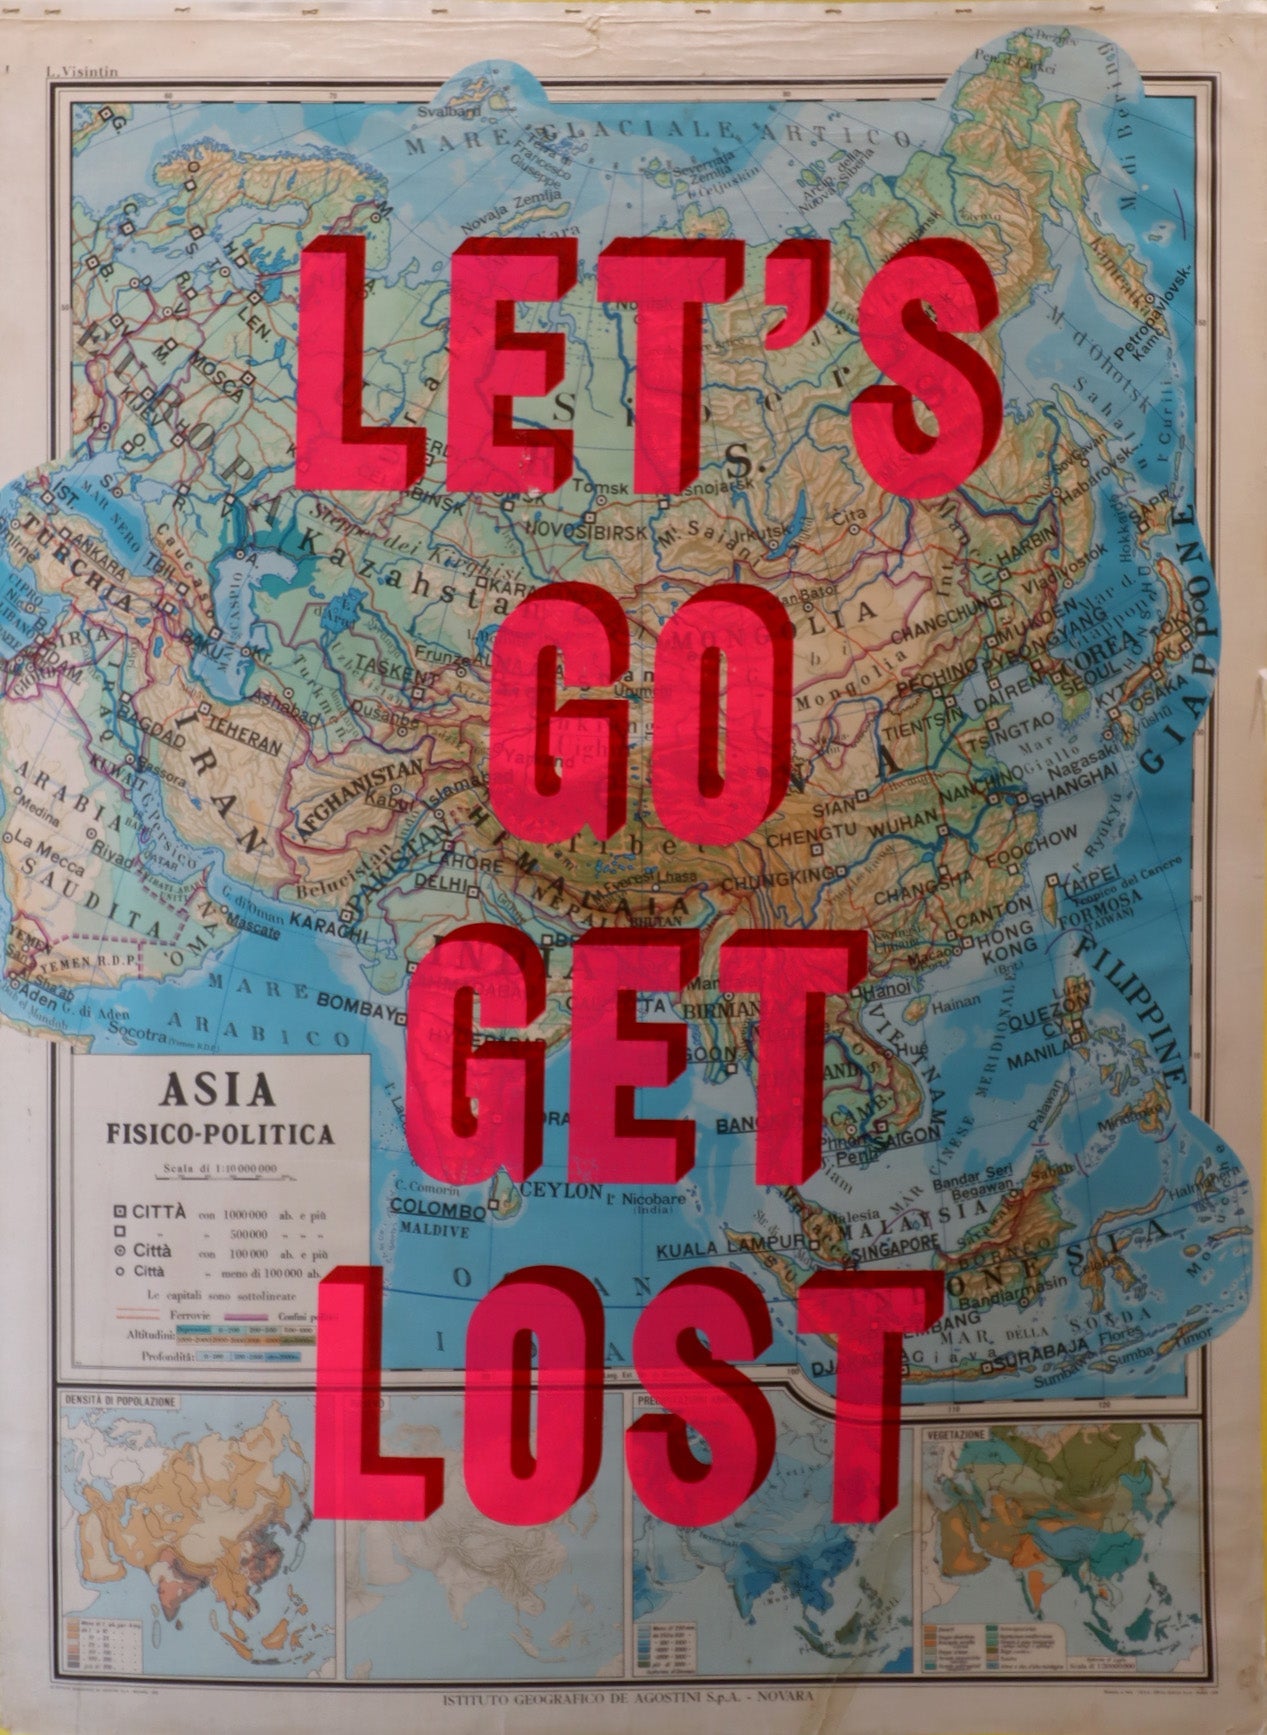 Let's Go Get Lost